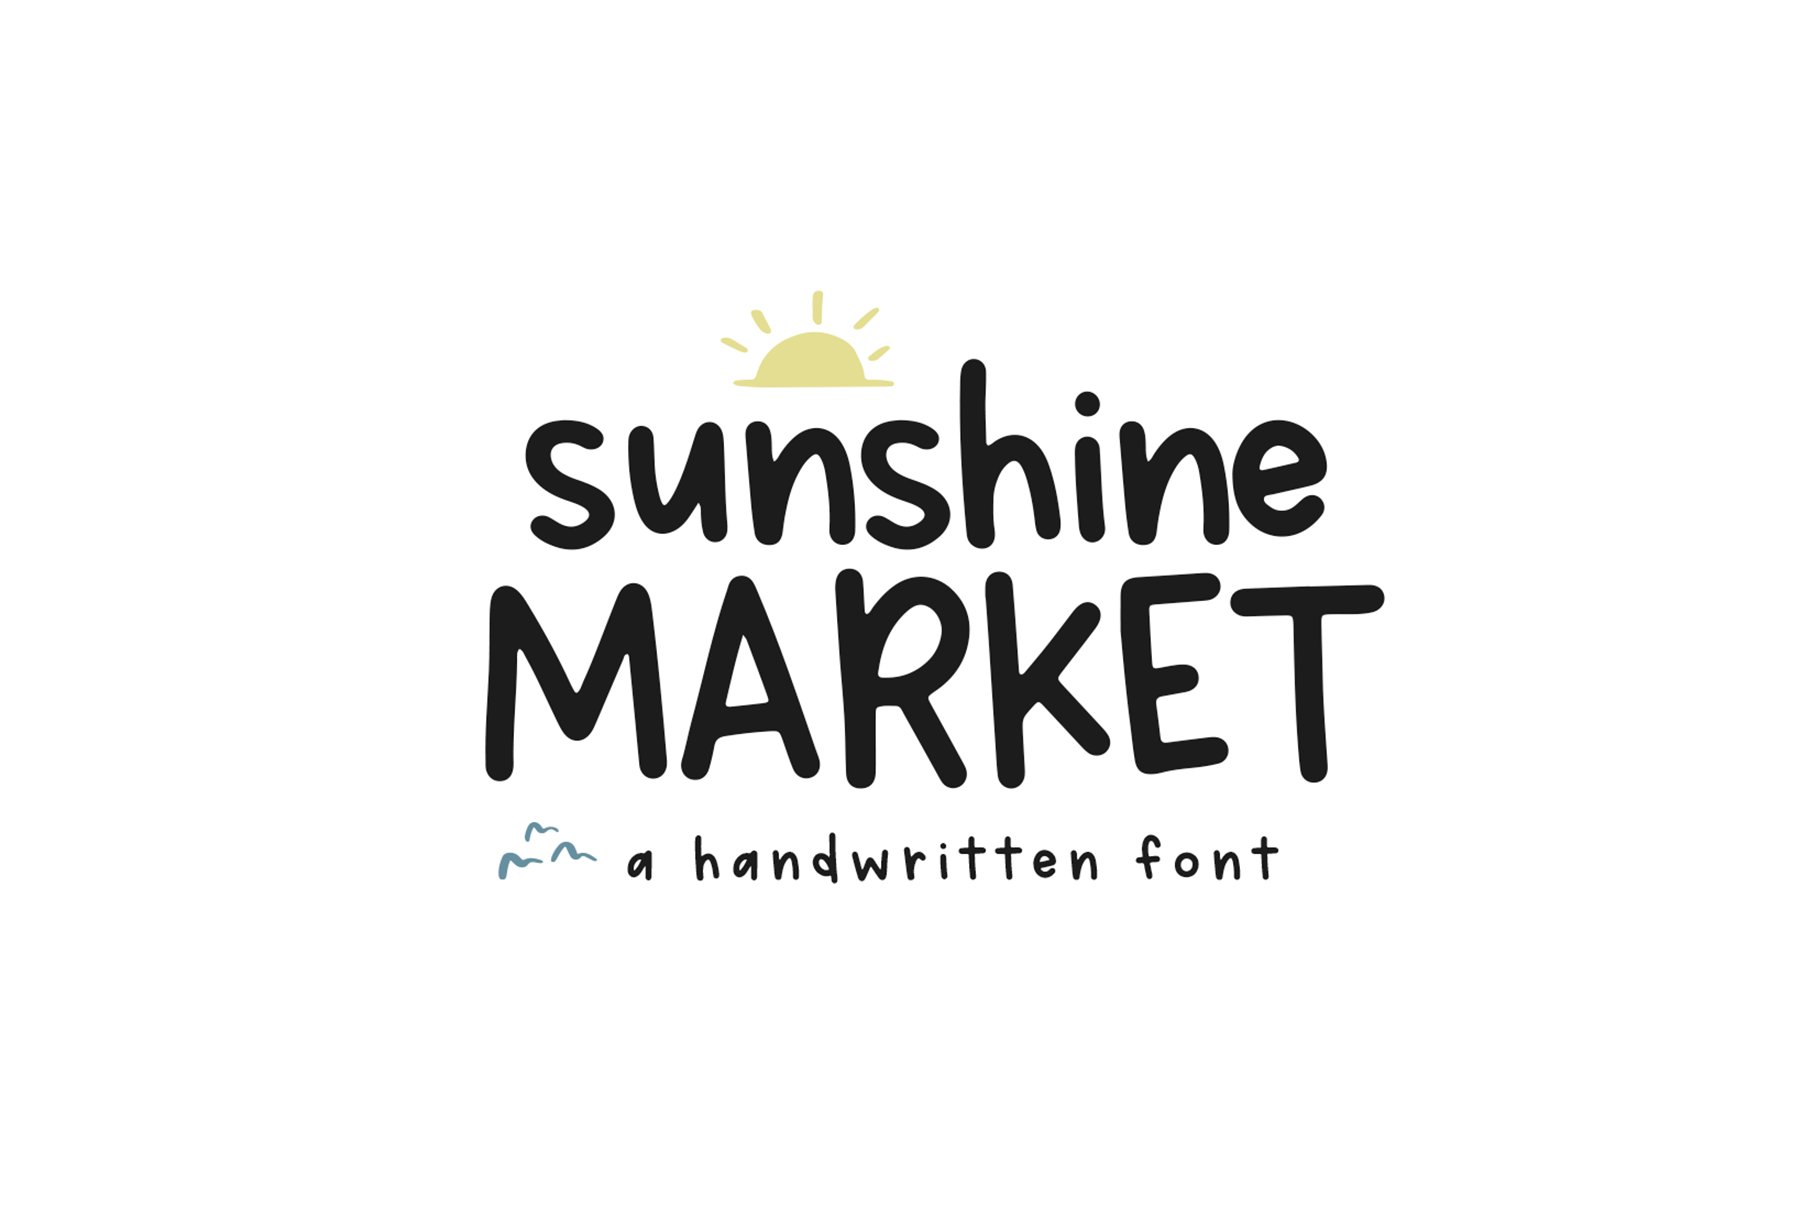 Sunshine Market - Handwritten Font cover image.